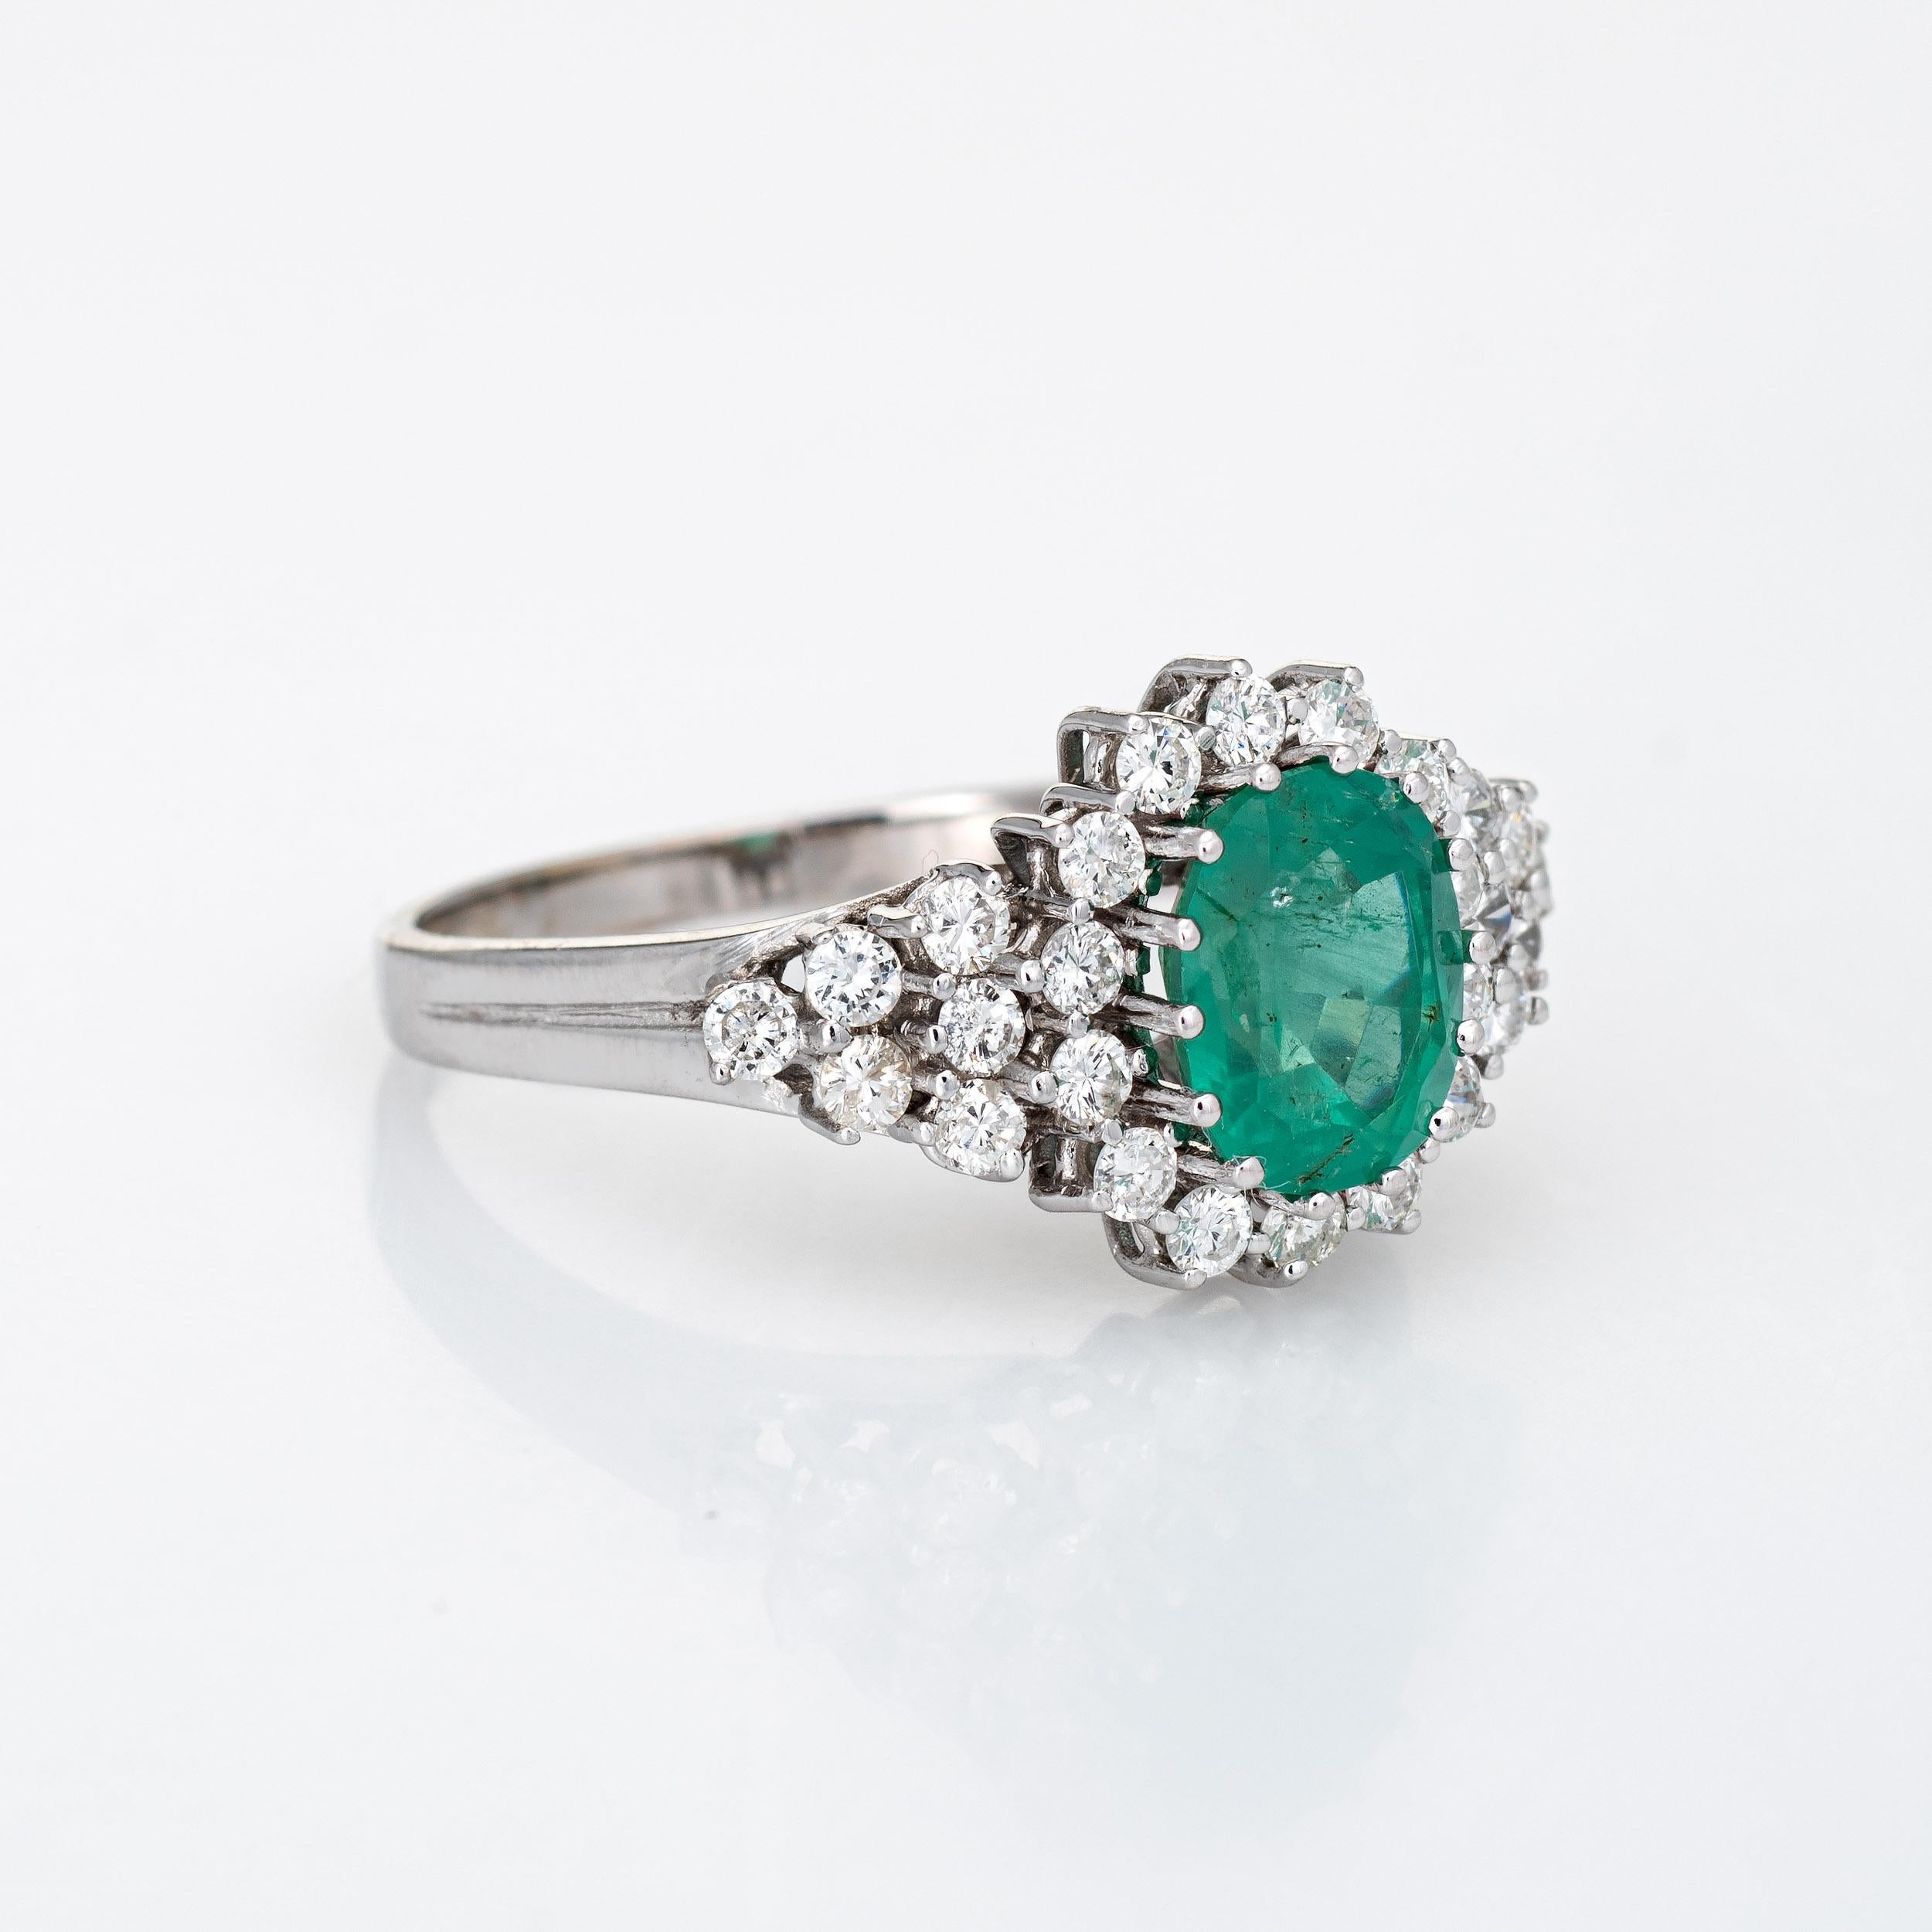 Contemporary Emerald Diamond Ring Estate 14k White Gold Gemstone Engagement Jewelry